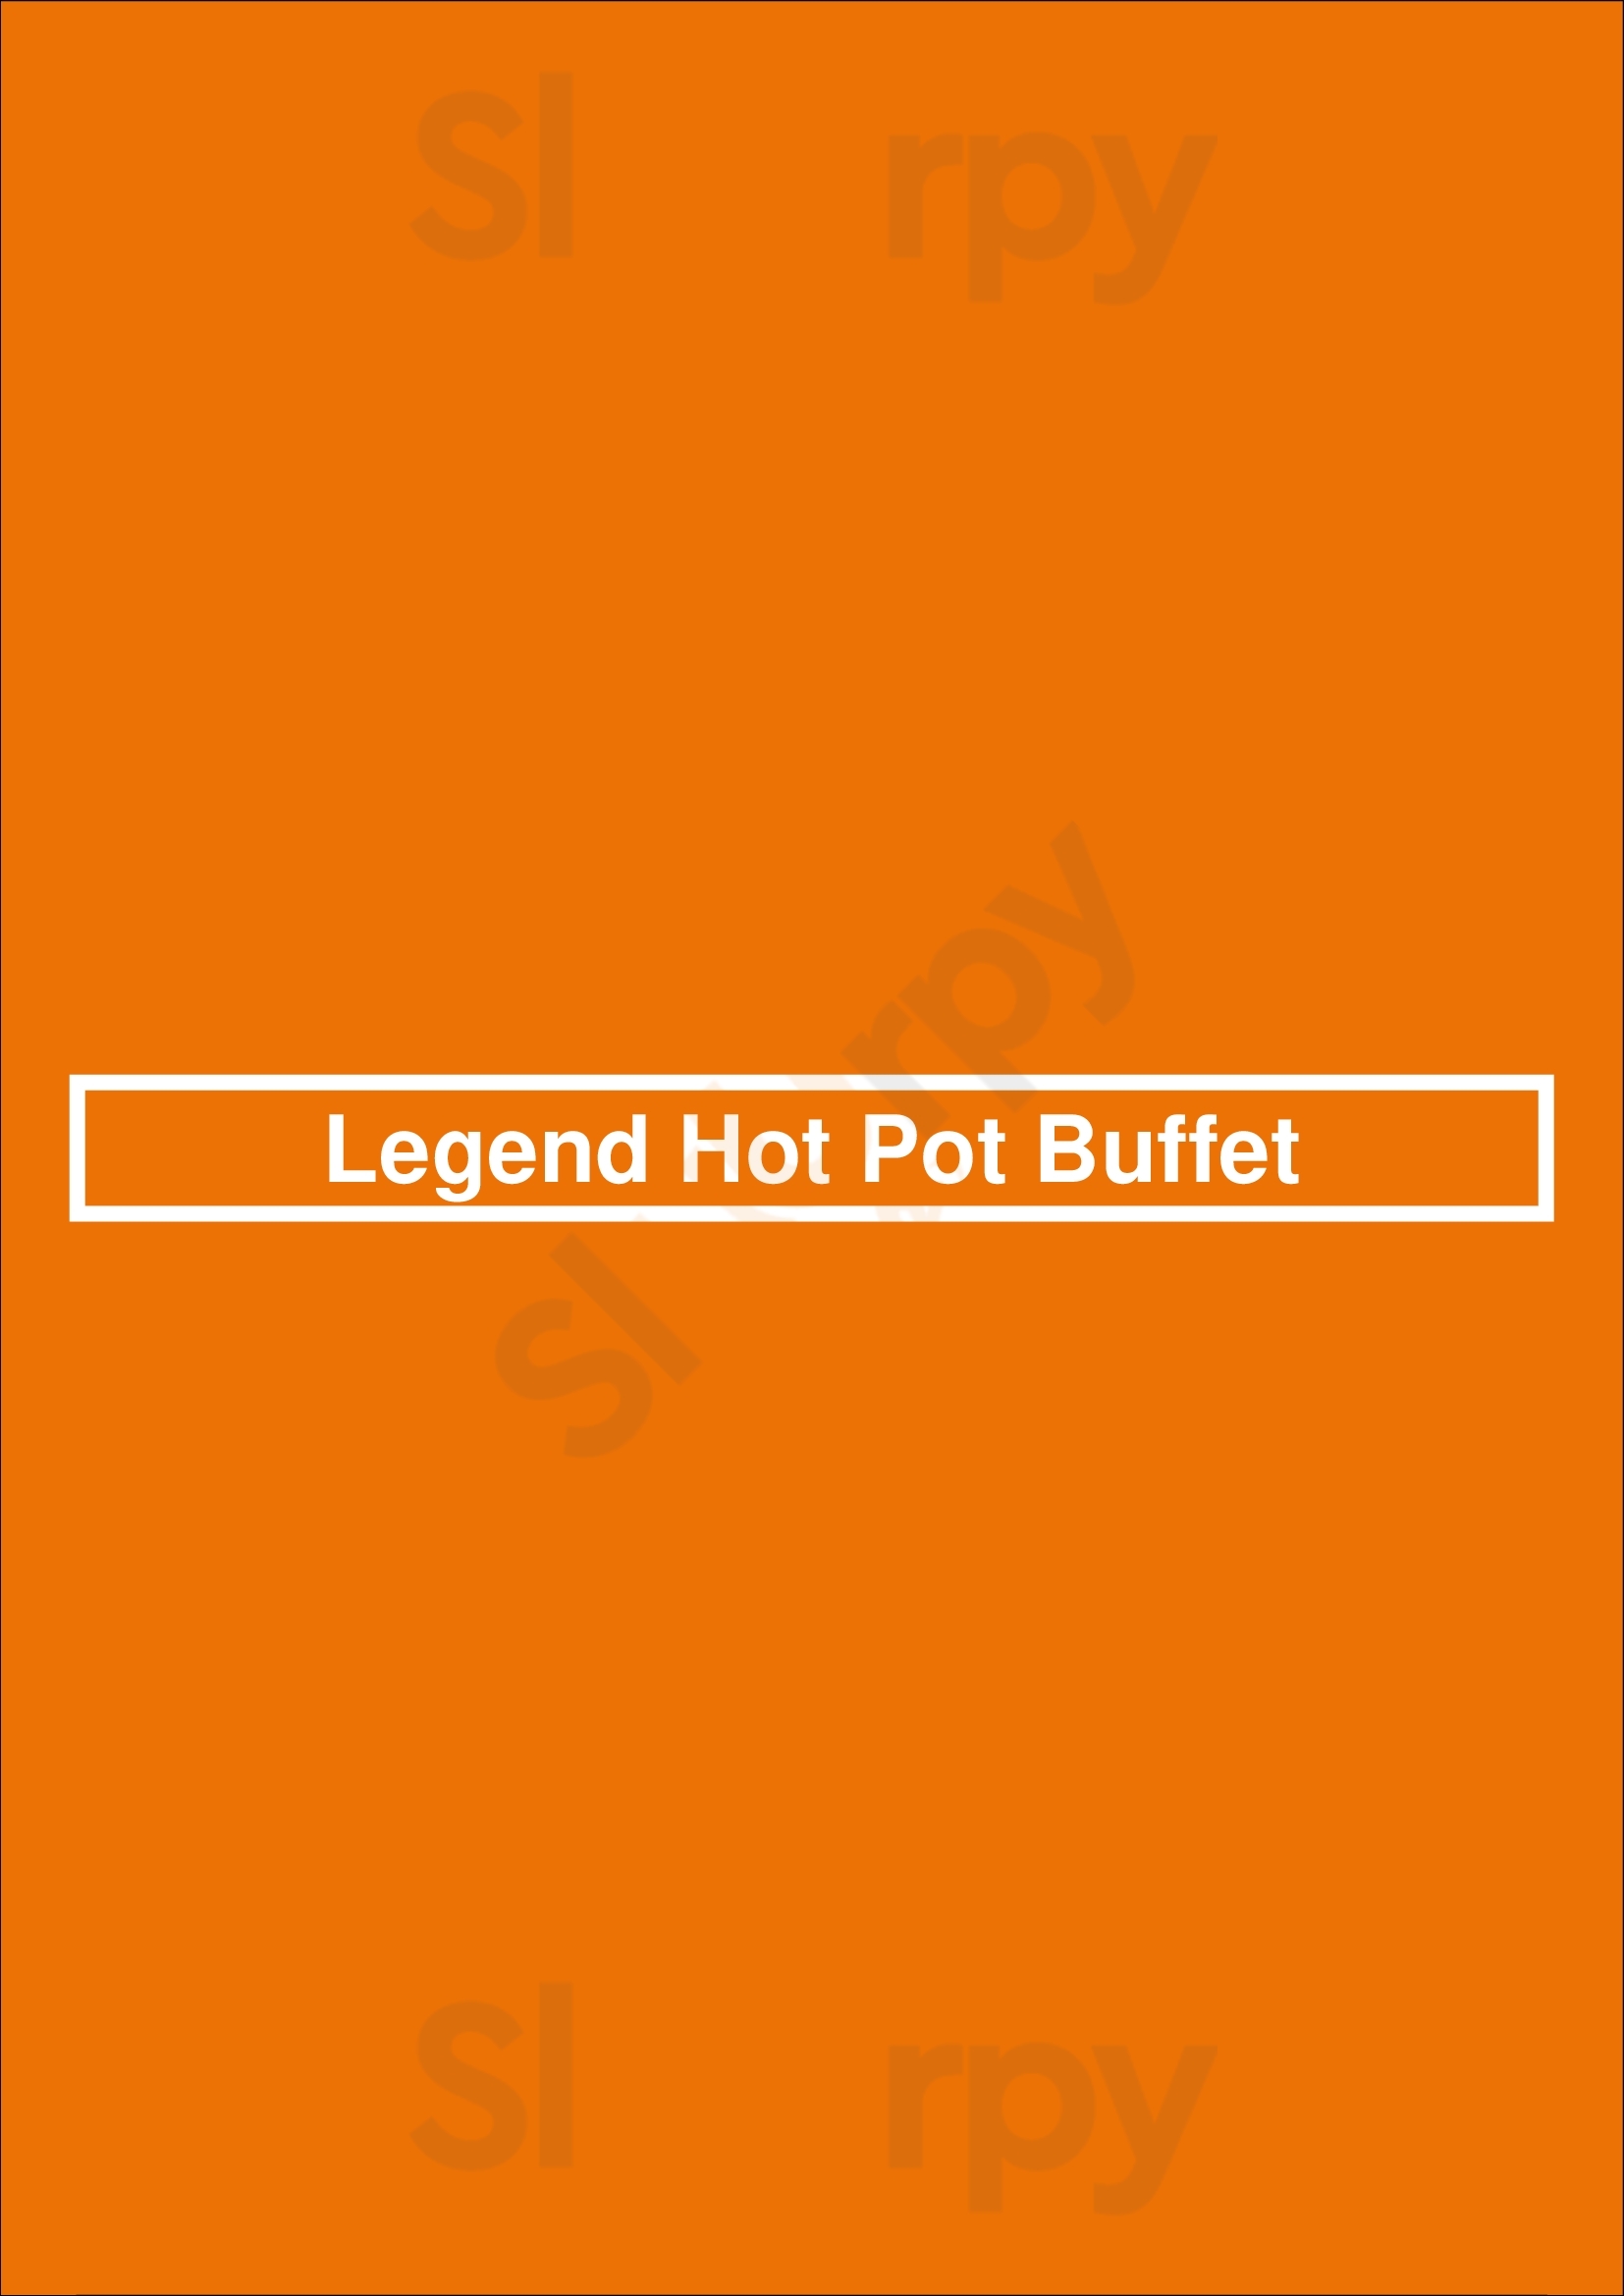 Legend Hot Pot Buffet Burwood Menu - 1